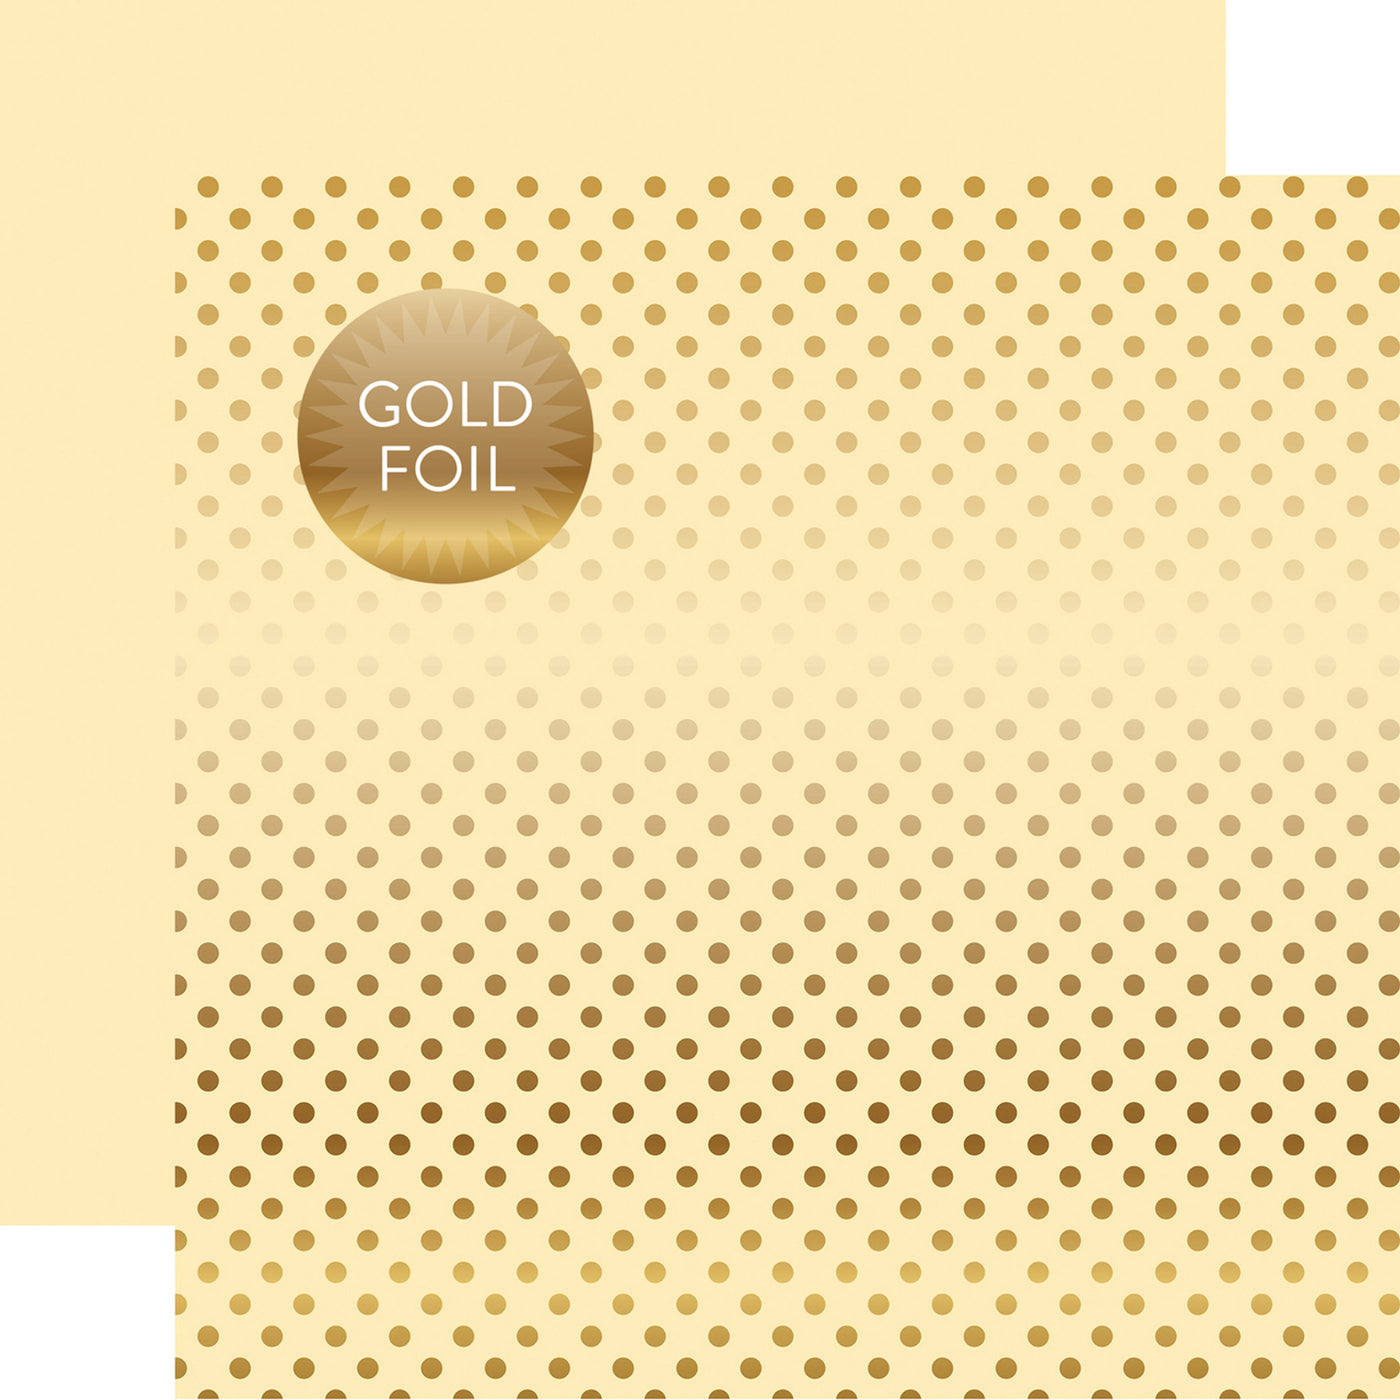 CREAM GOLD FOIL DOT - Dots & Stripes 12x12 Cardstock Echo Park